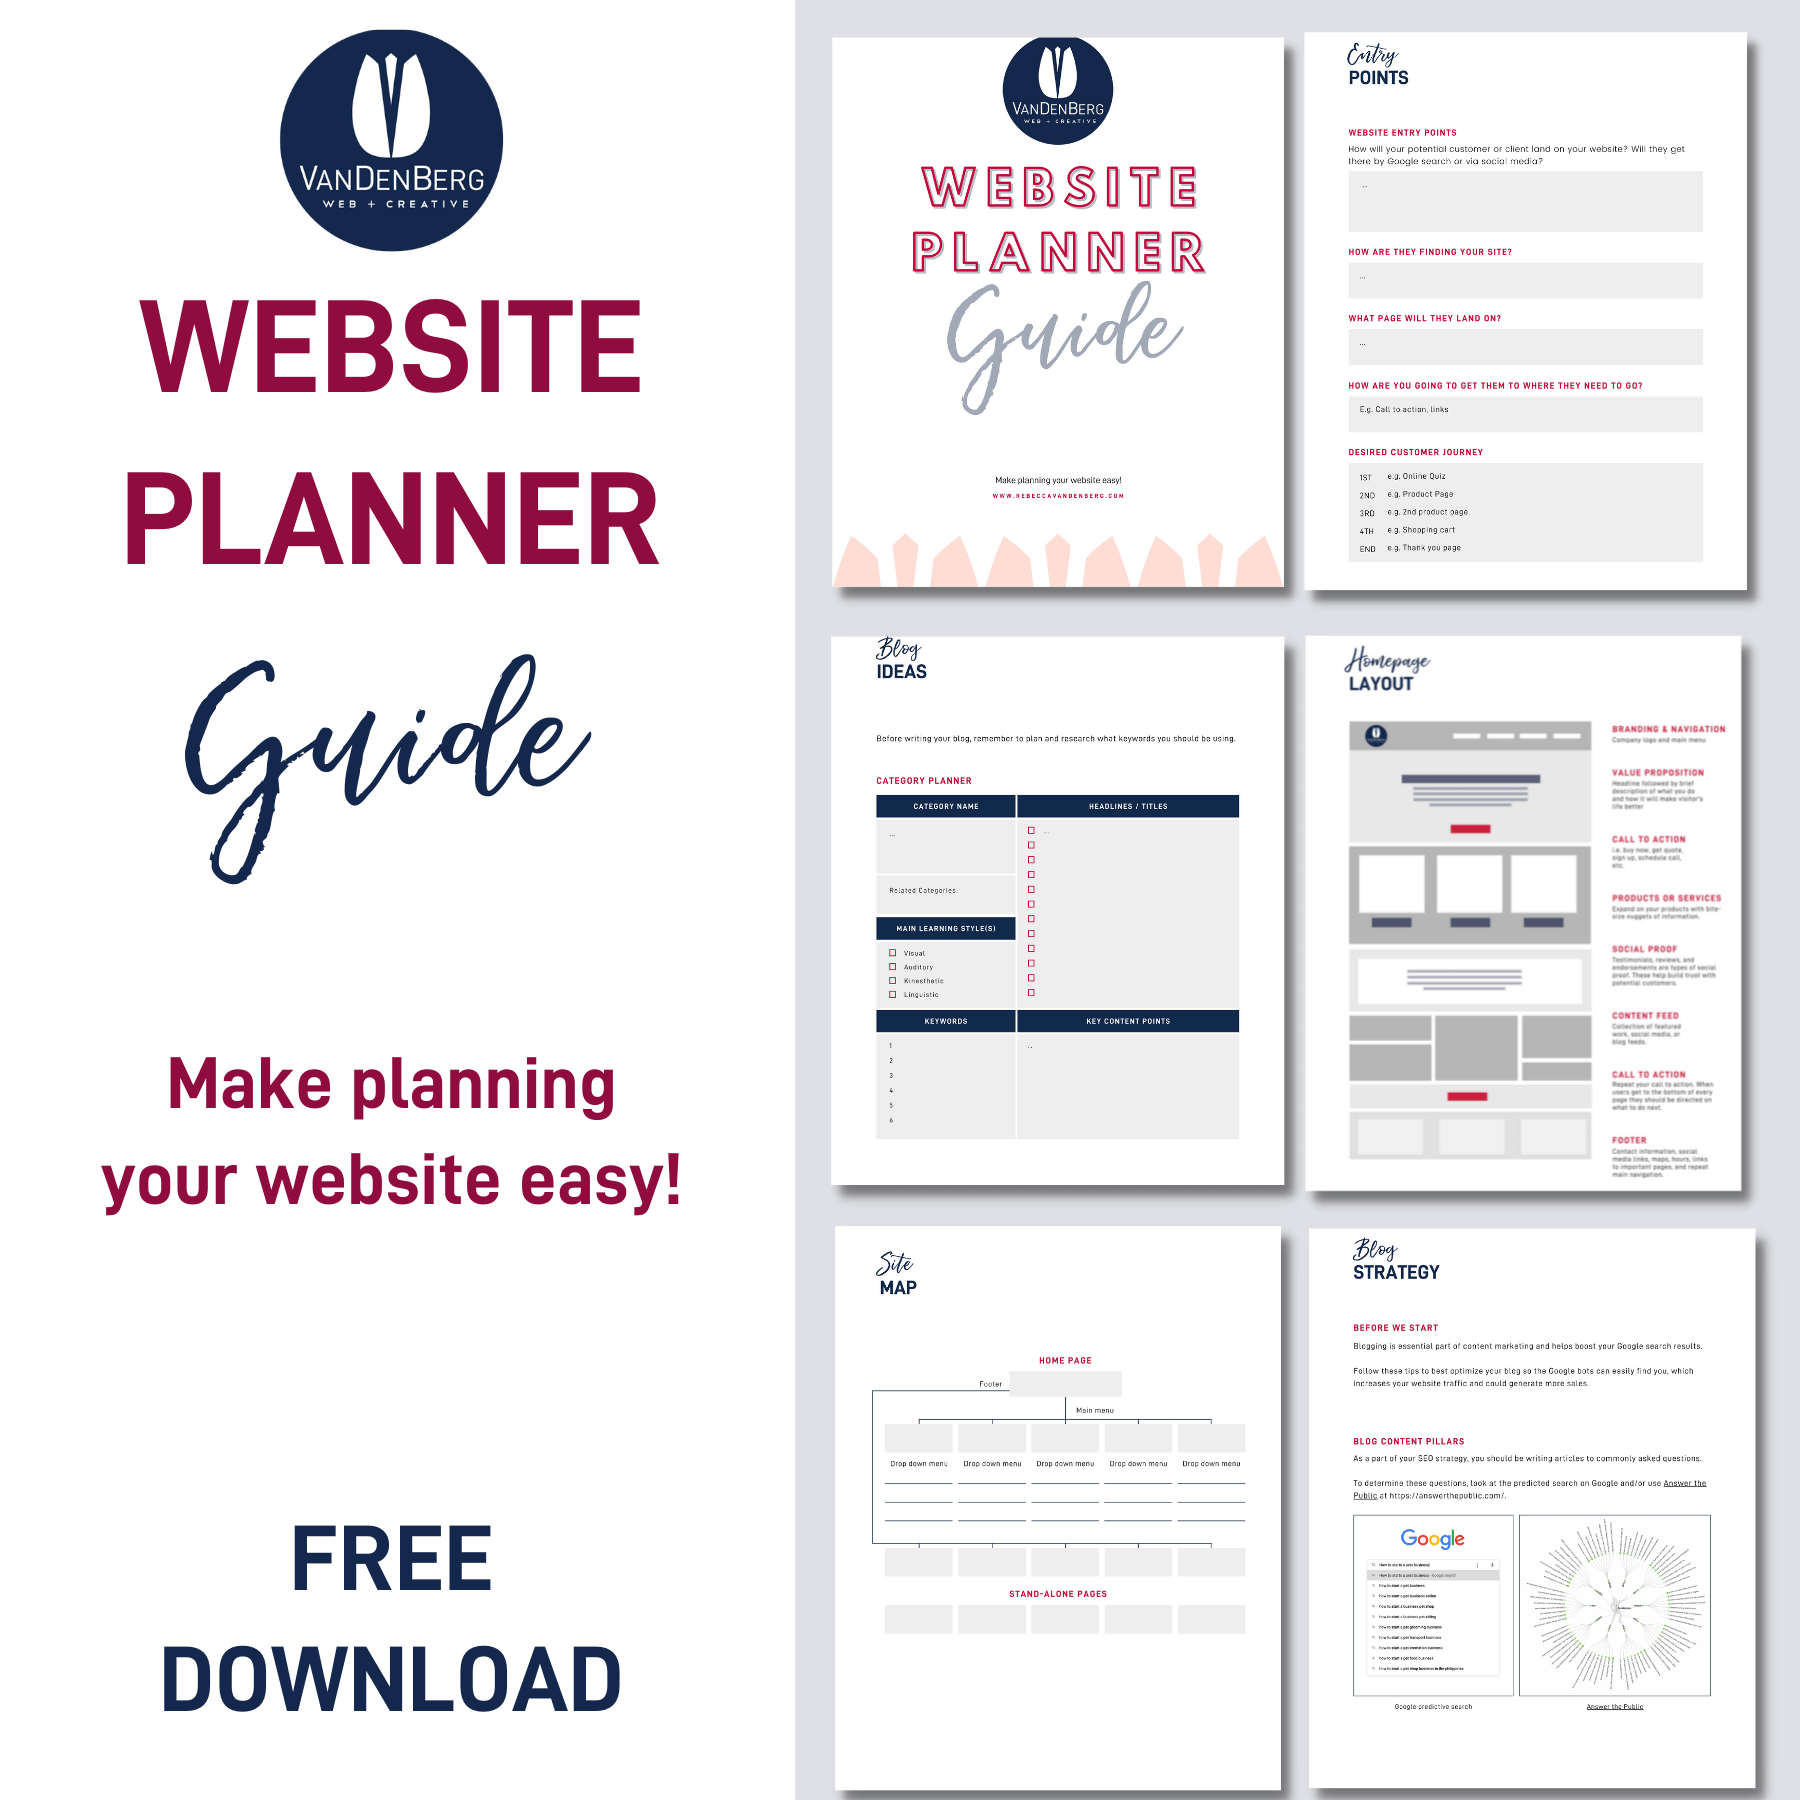 website planner guide free download